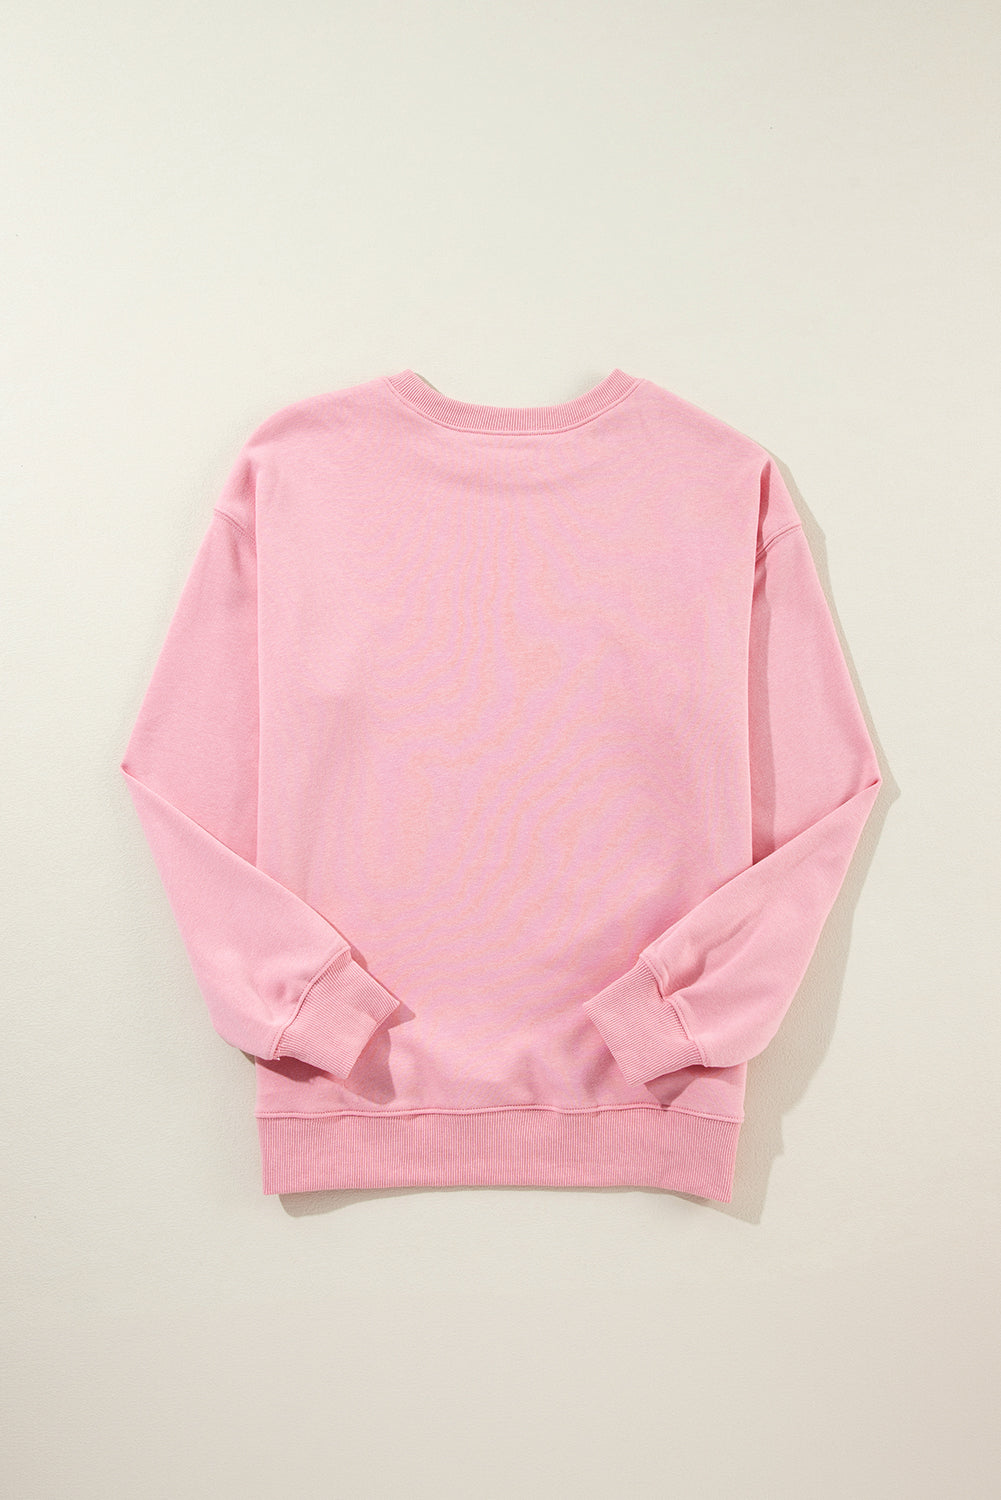 Pink Solid Classic Crewneck Pullover Sweatshirt